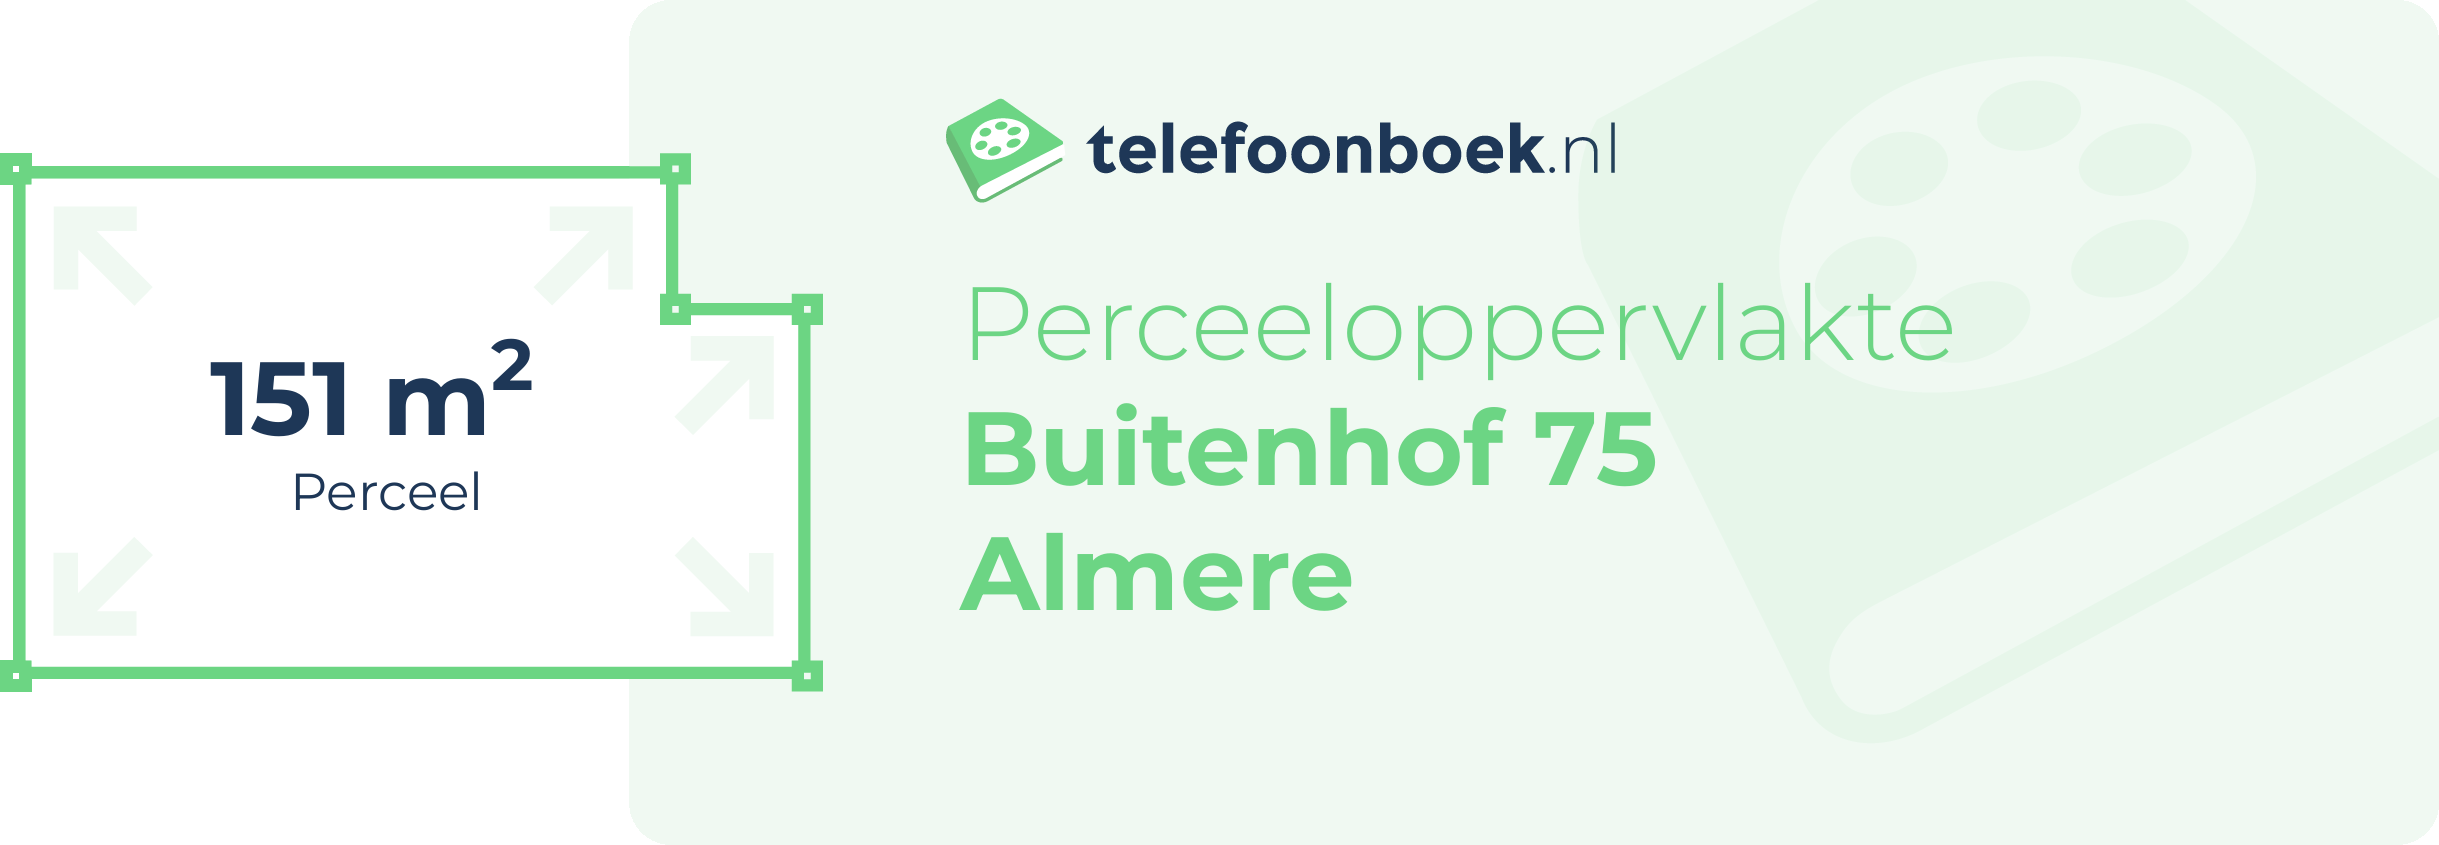 Perceeloppervlakte Buitenhof 75 Almere